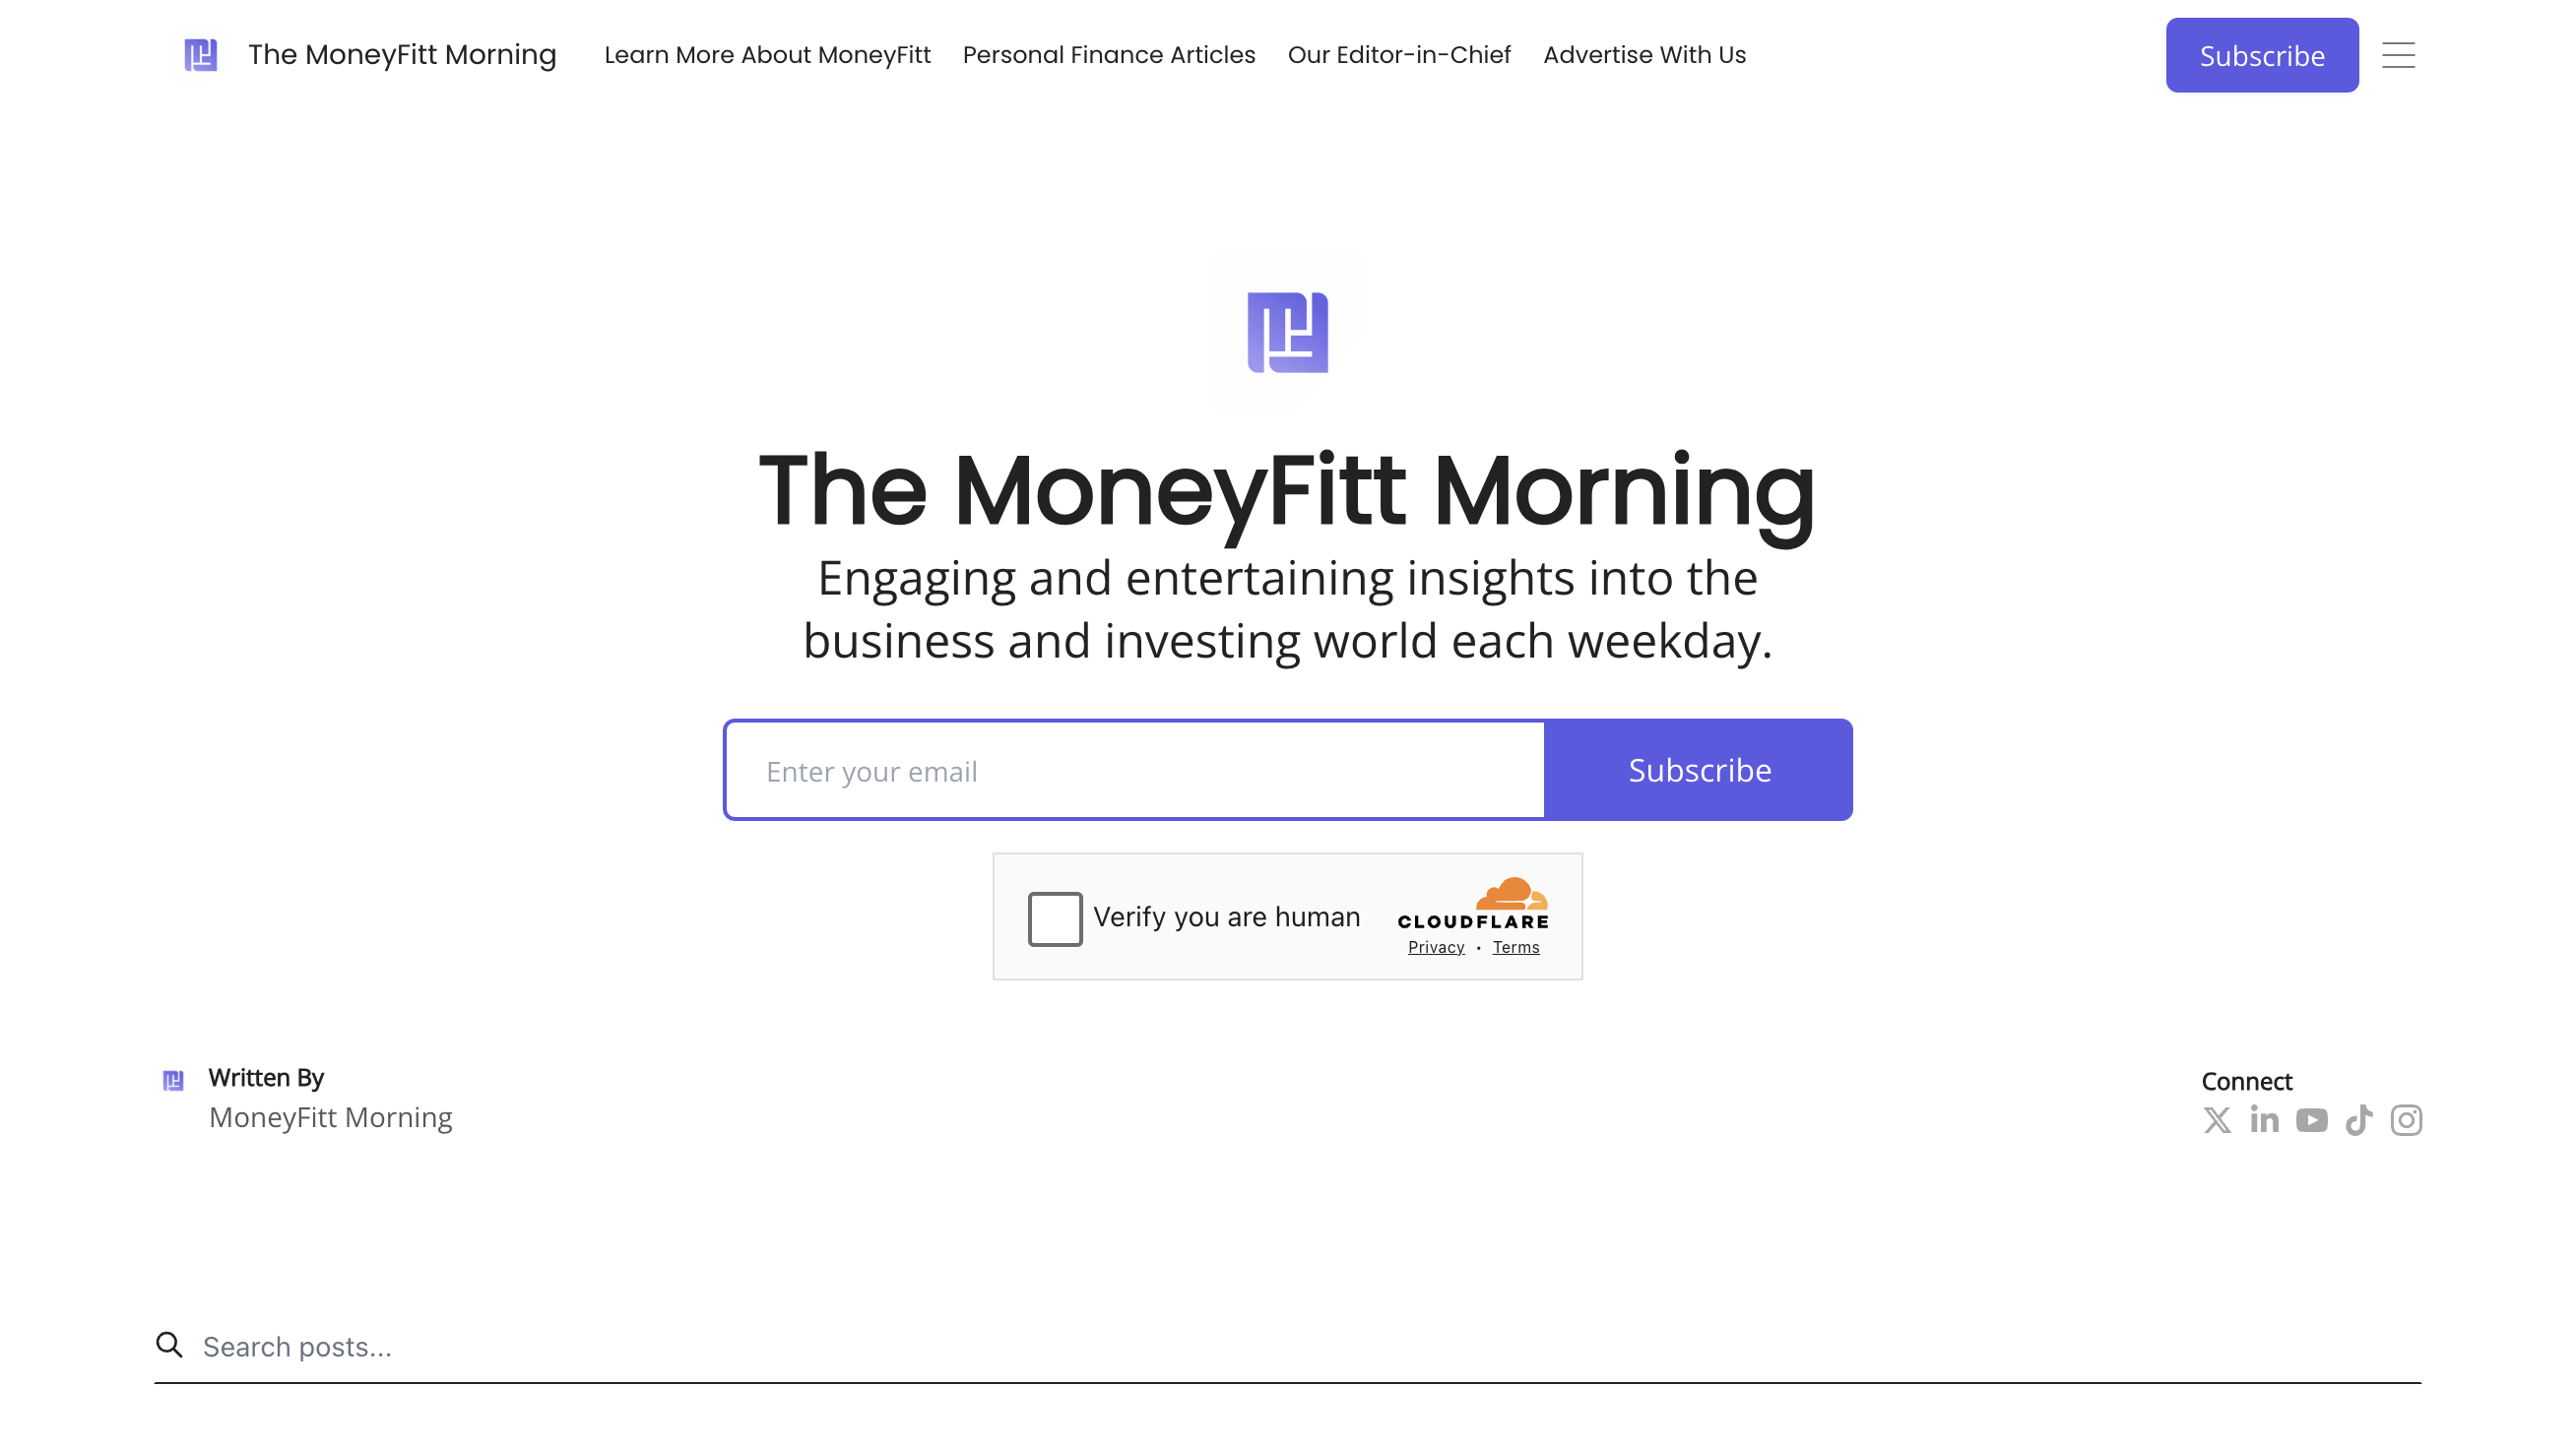 The MoneyFitt Morning homepage